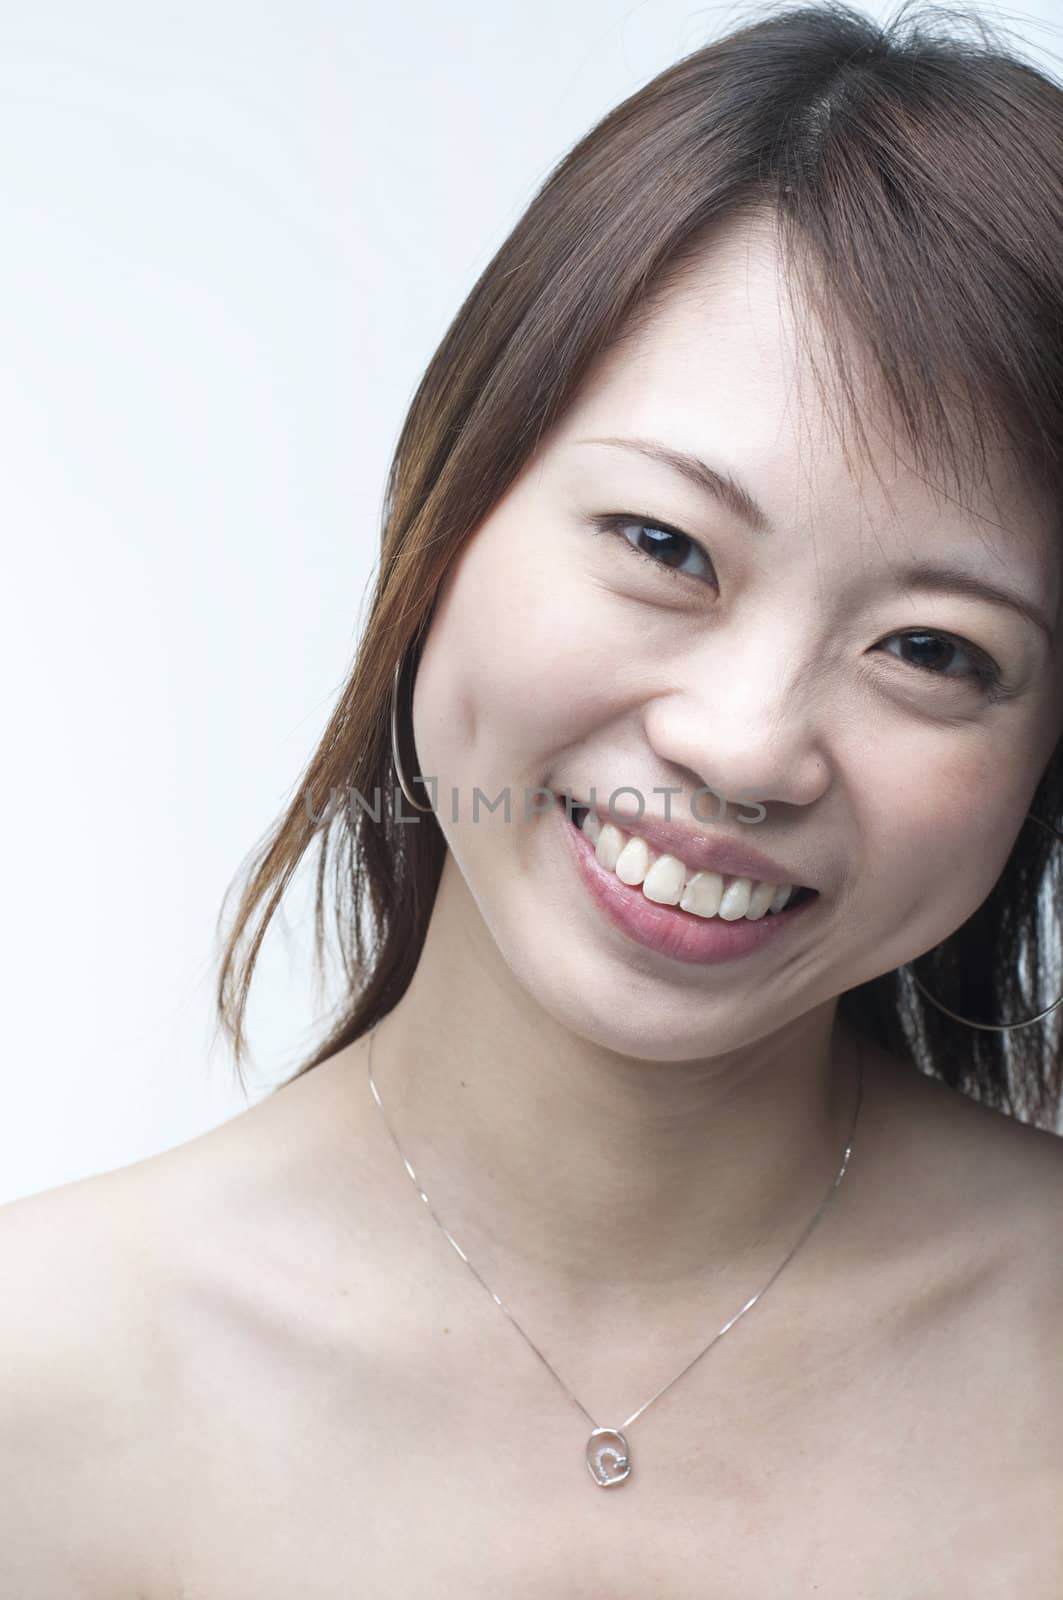  close portrait shot of smiling asian girl